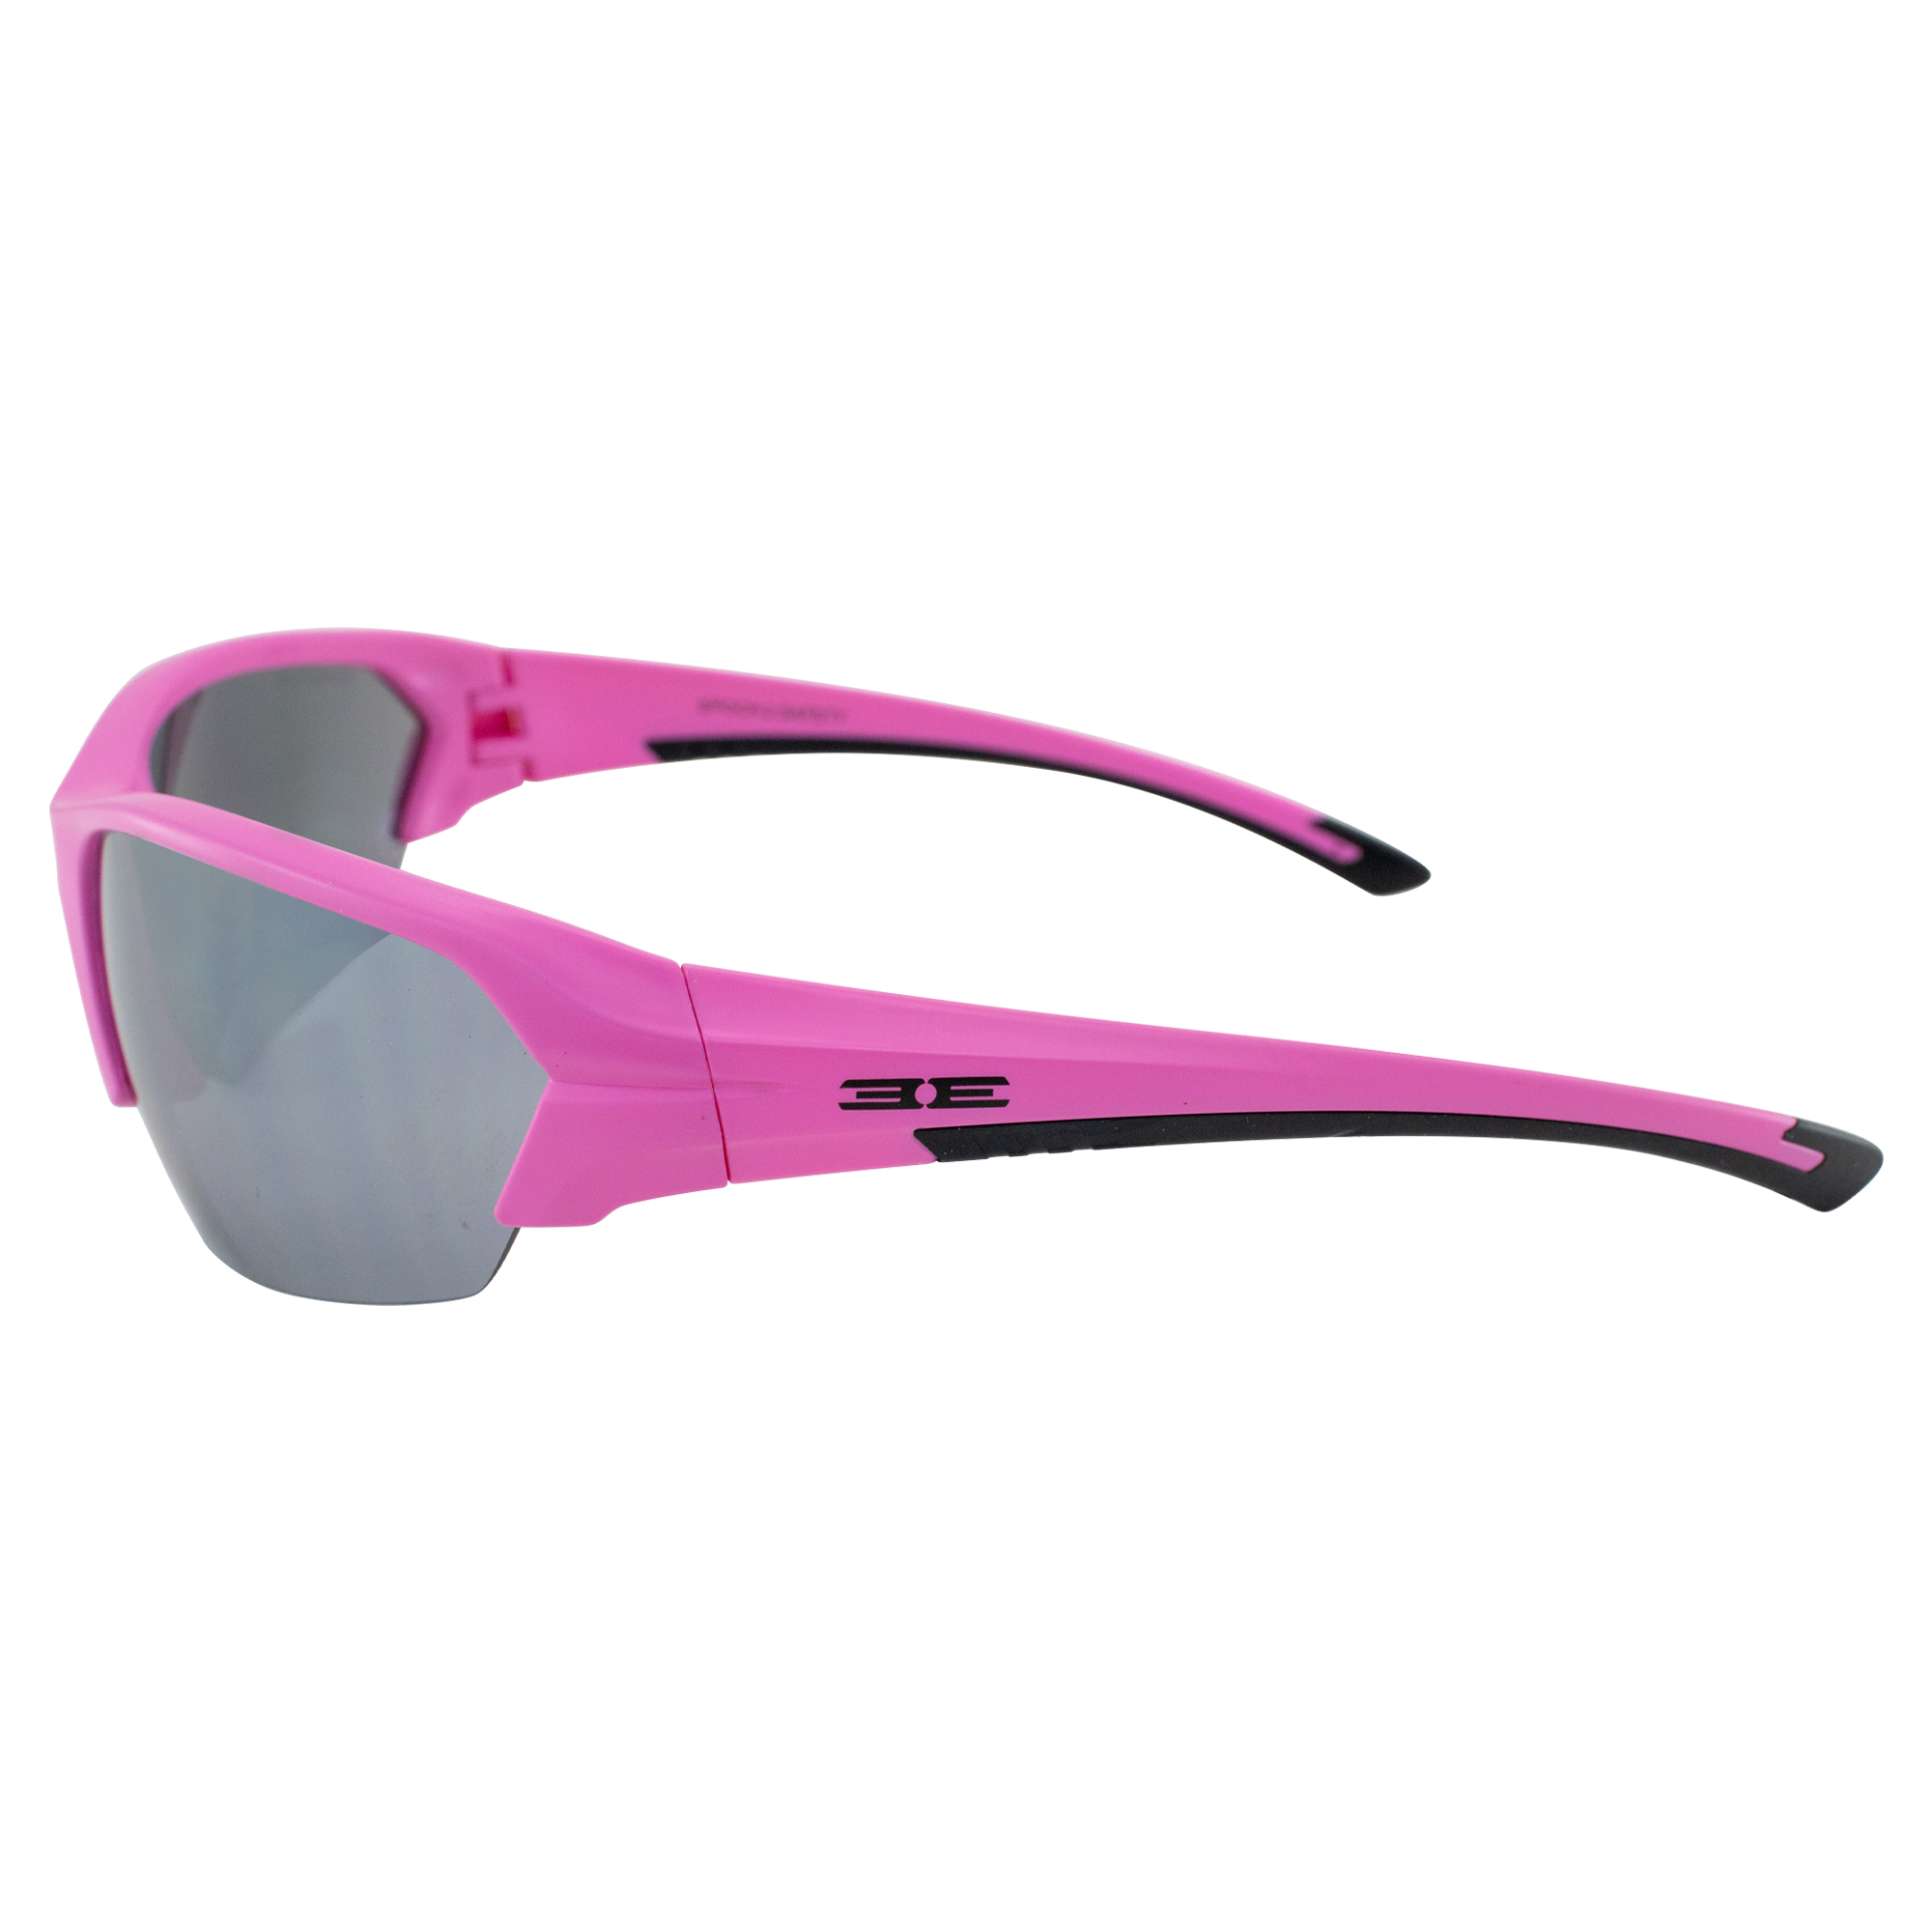 Epoch Eyewear Wake Sunglasses Style Pink with Smoke Lens - image 3 of 8